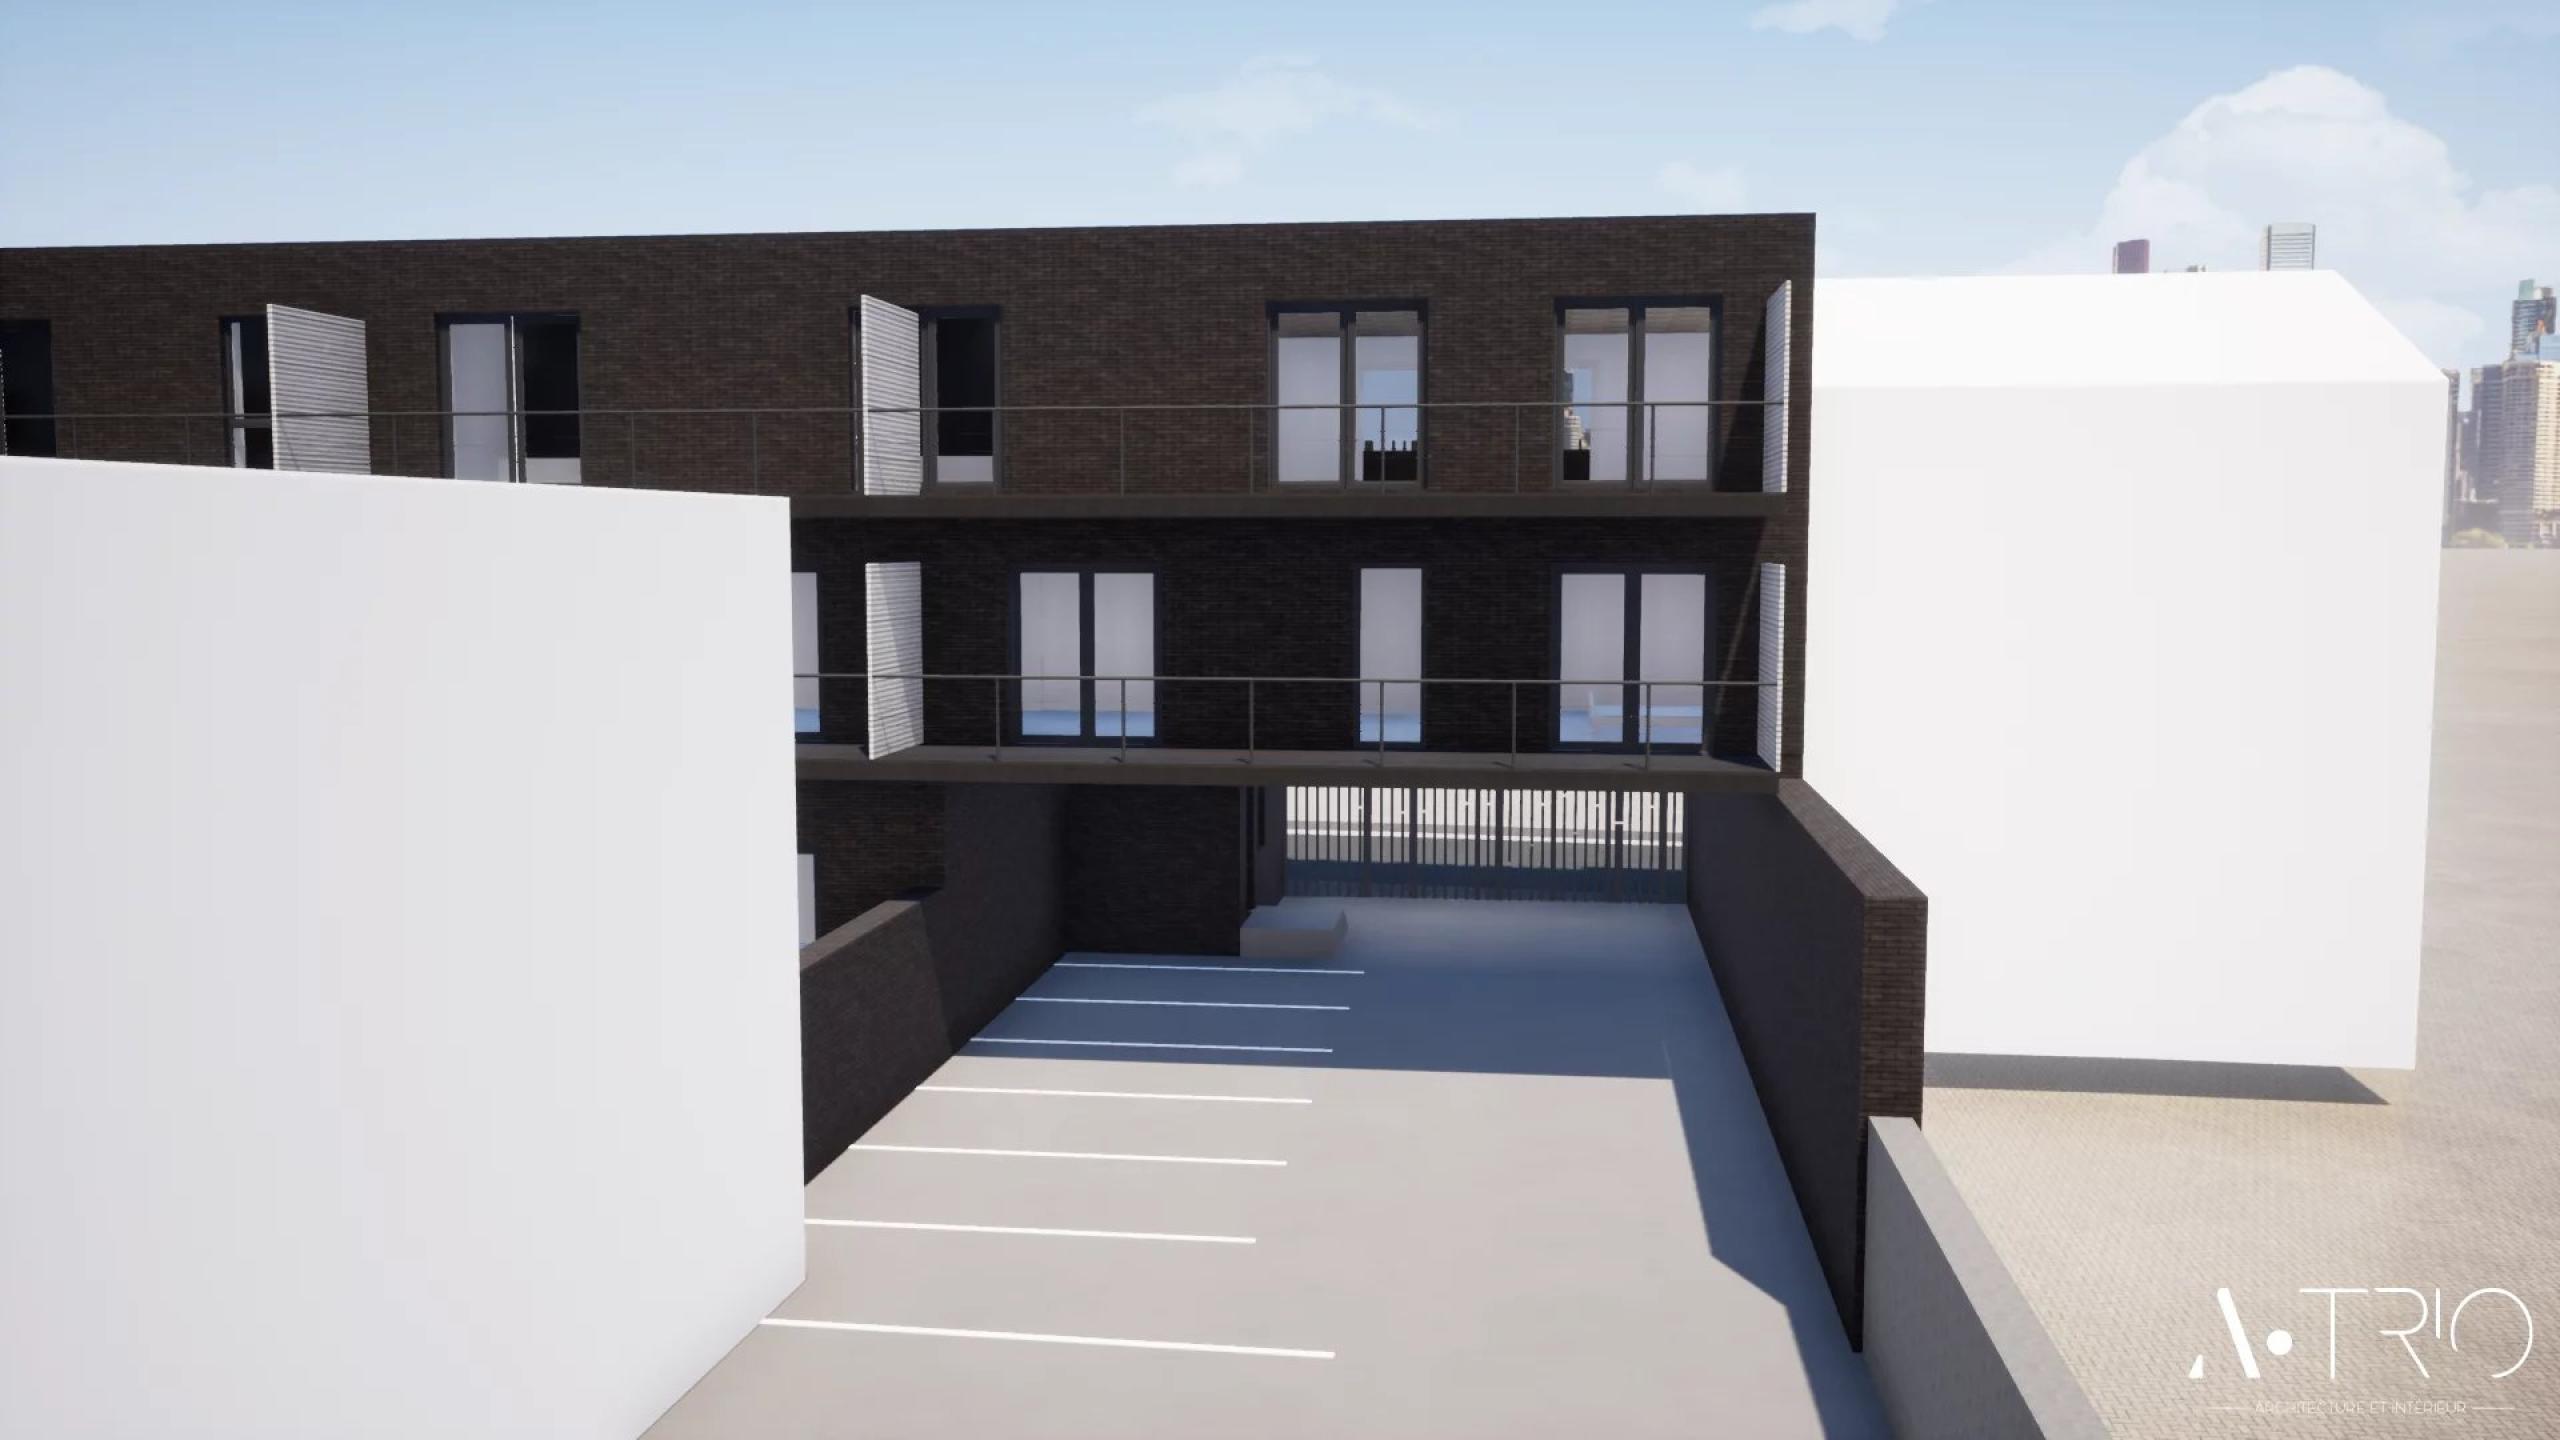 1 er étage : Appartement 2 chambres parking couvert, terrasse